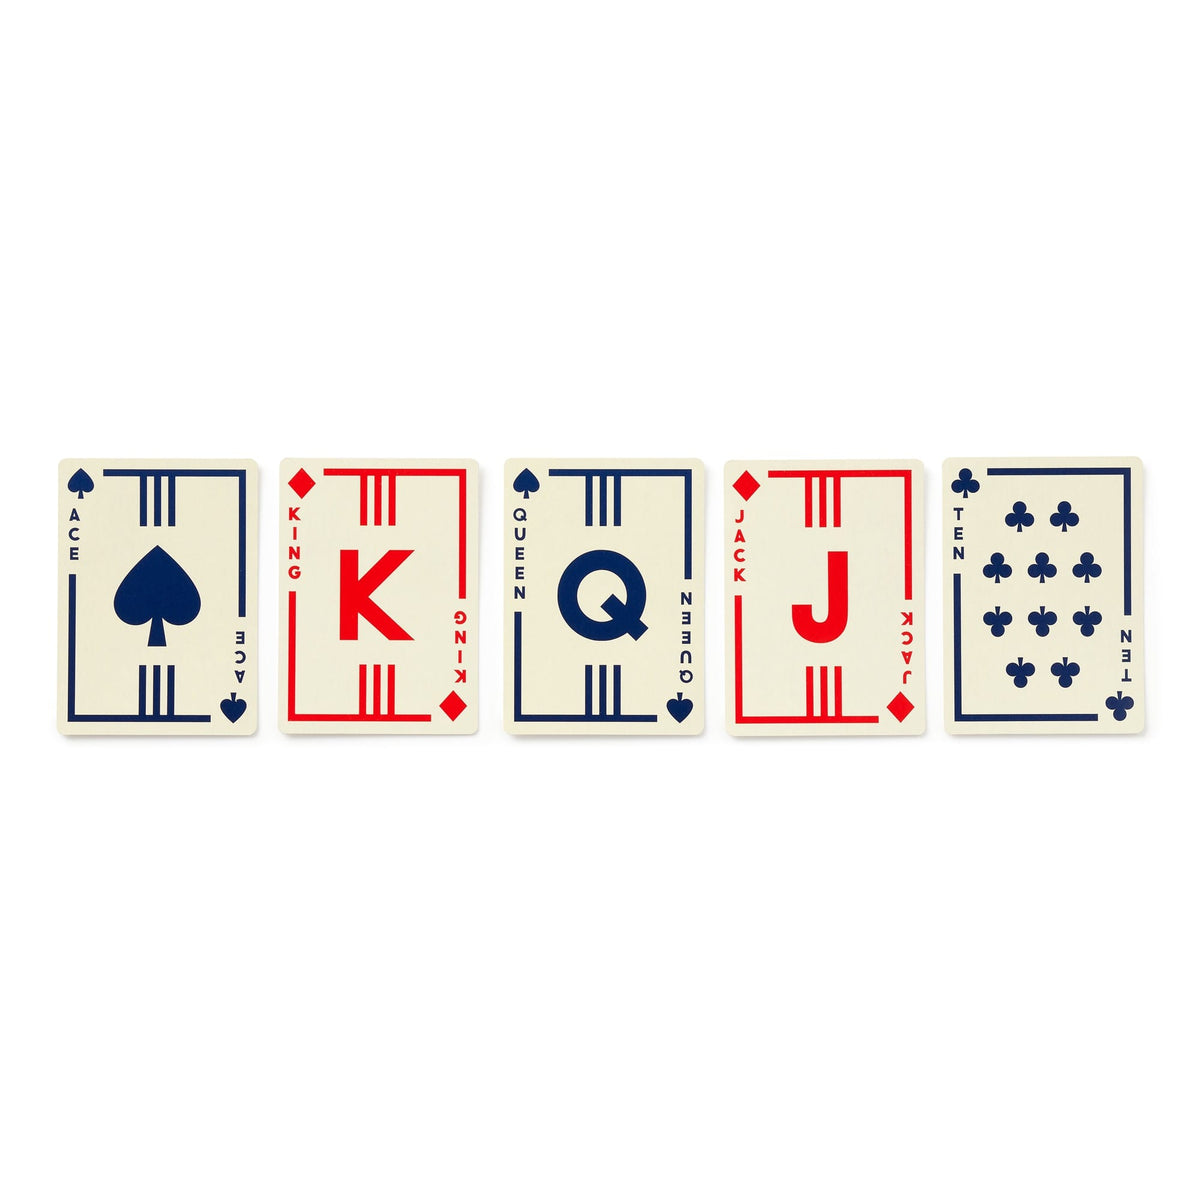 Raise The Stakes Poker Game Set Card Games Brass Monkey 